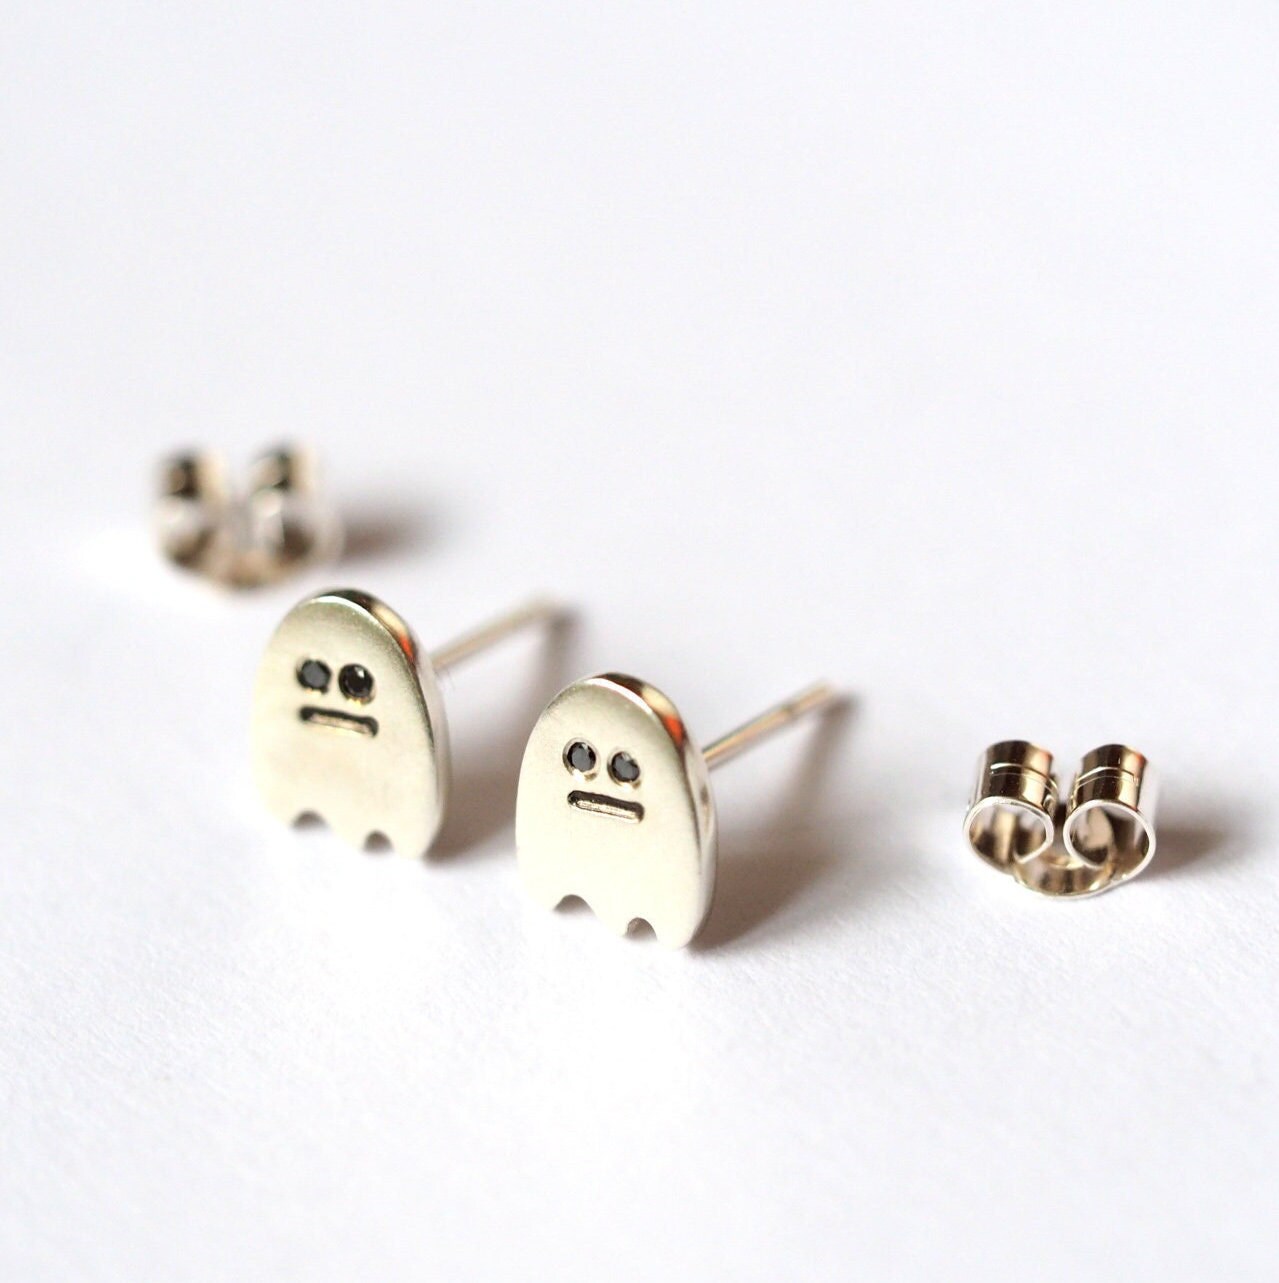 Ghost & Skull Earrings - Recycled Sterling Silver